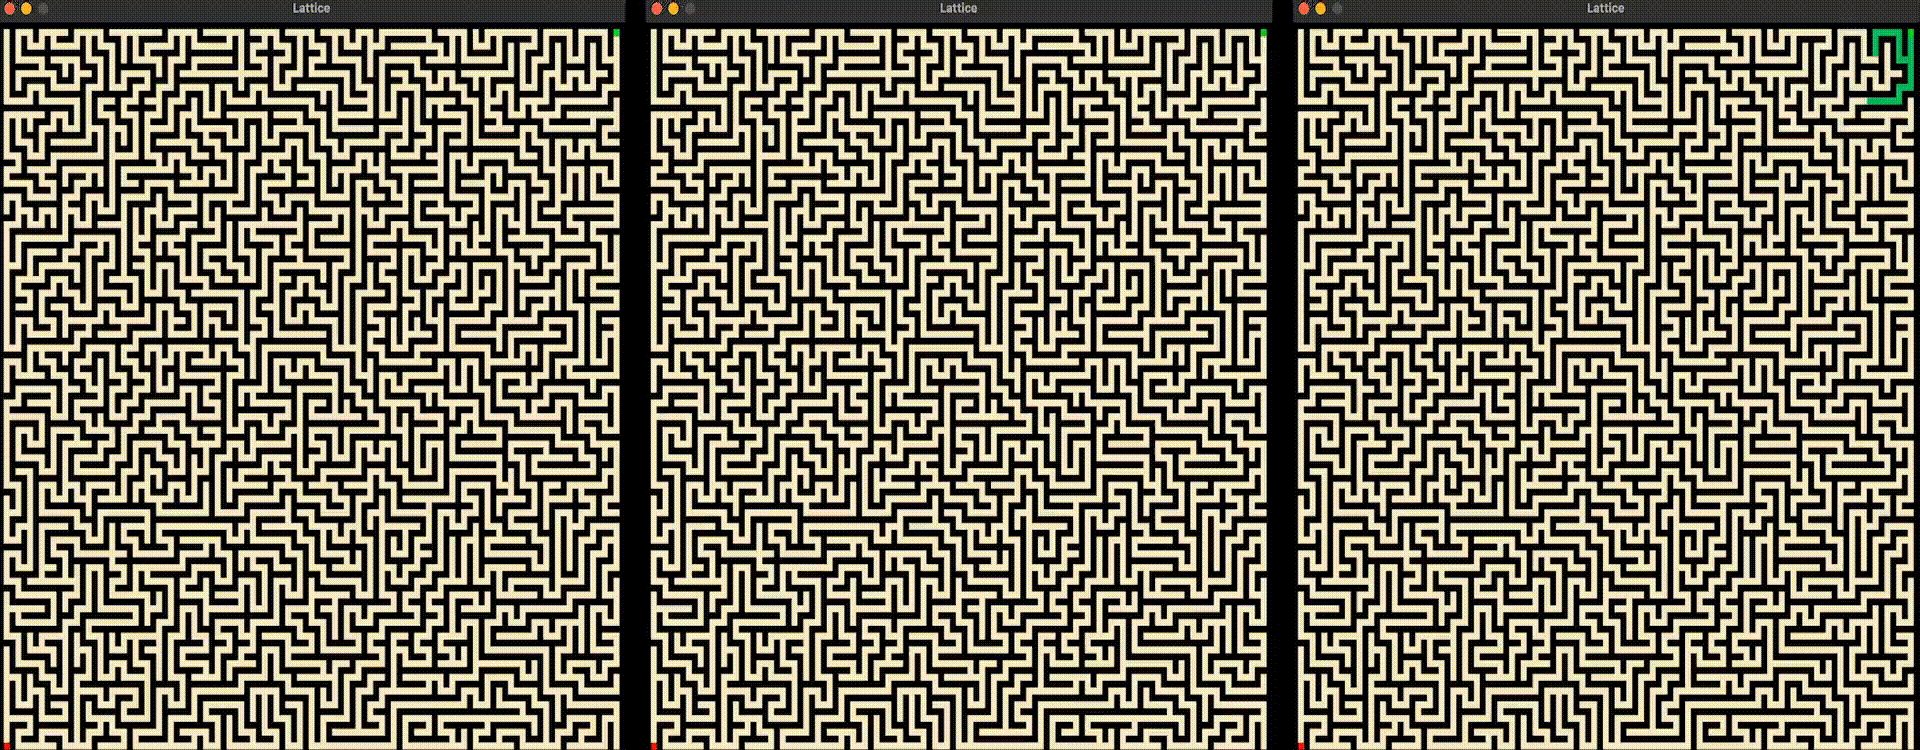 Pathfinding algorithms on a maze